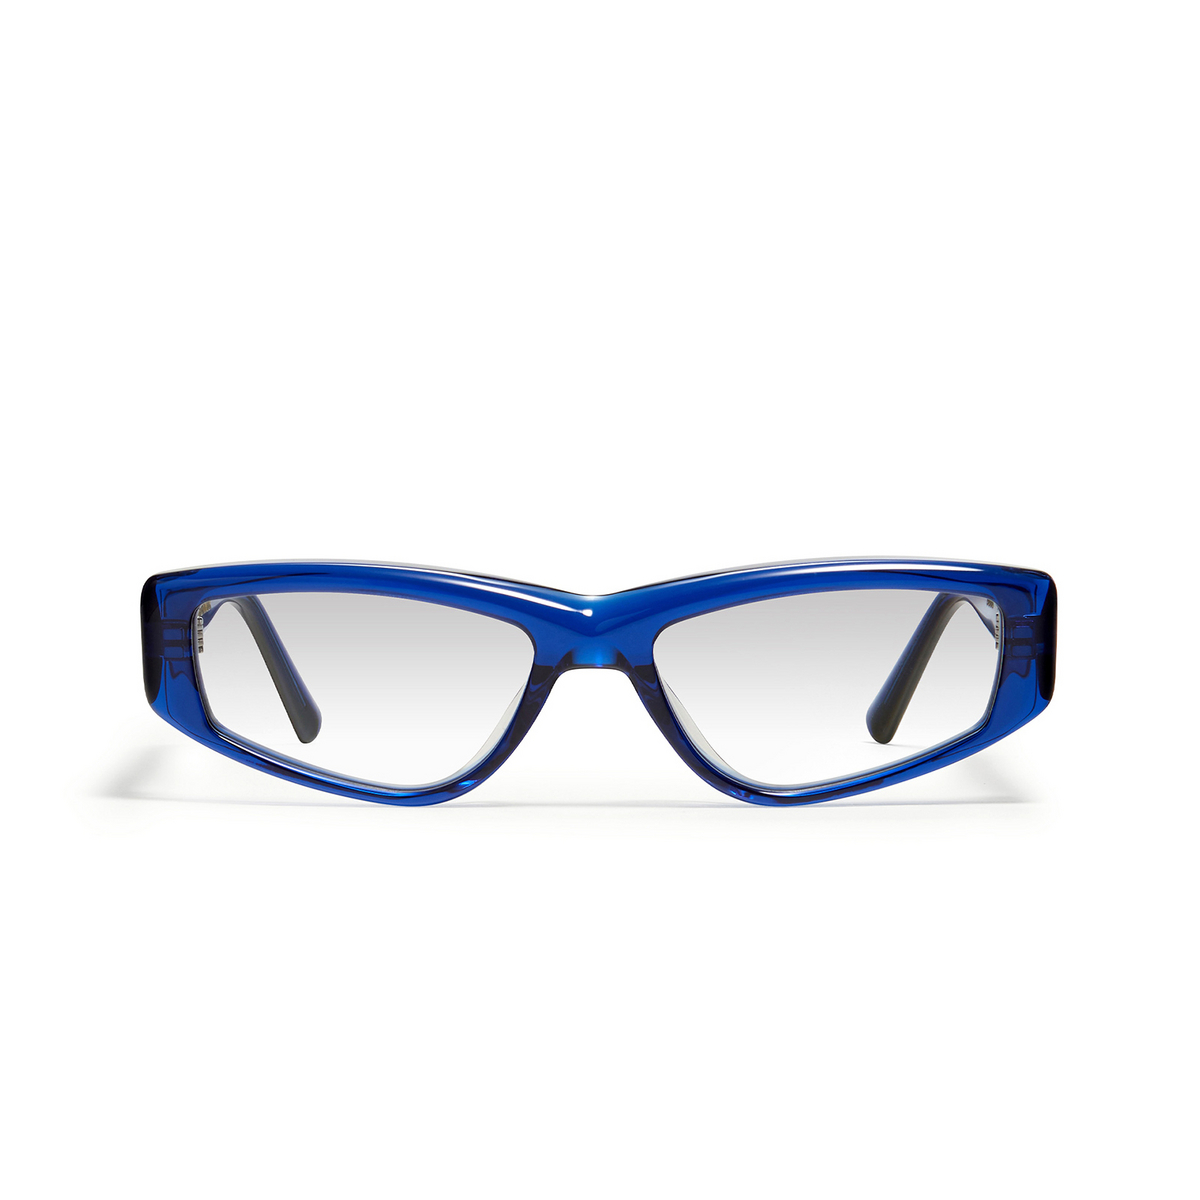 Gentle Monster® Cat-eye Sunglasses: Duru color Blue BLC3 - front view.